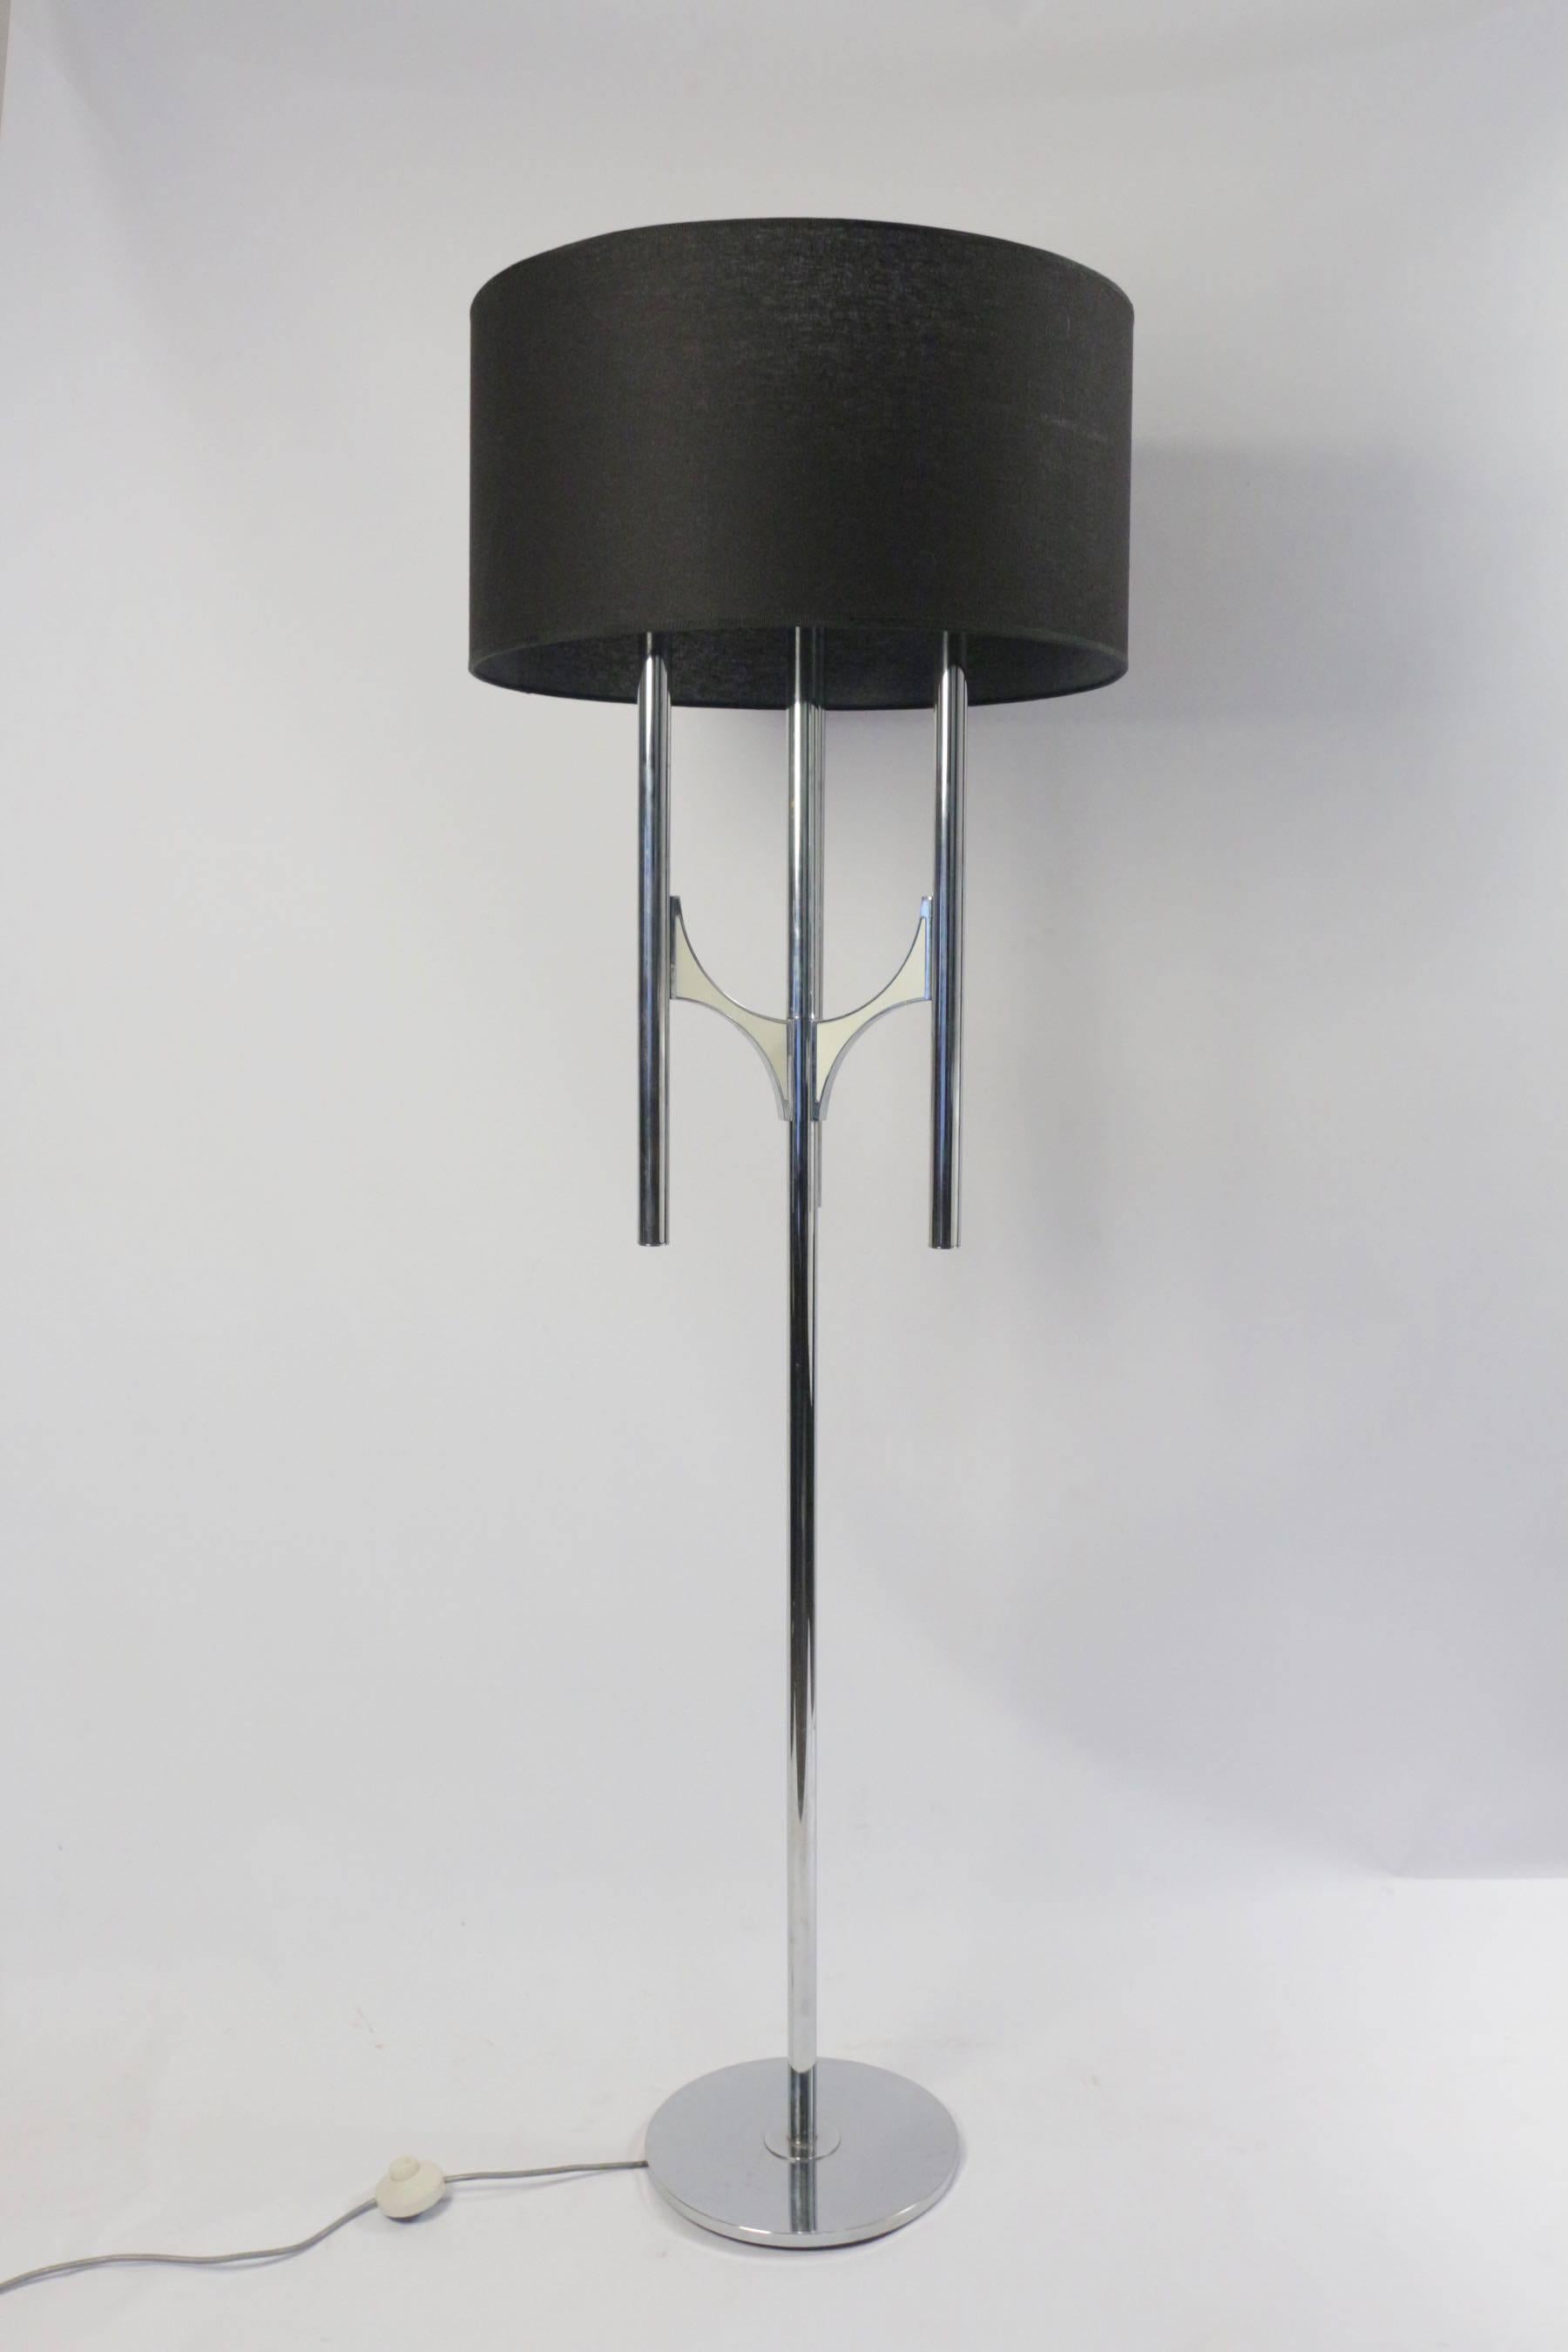 Gaetano Sciolari's chromed metal floor lamp composed of three lighting's arms.
Stamped under the base,
circa 1970.